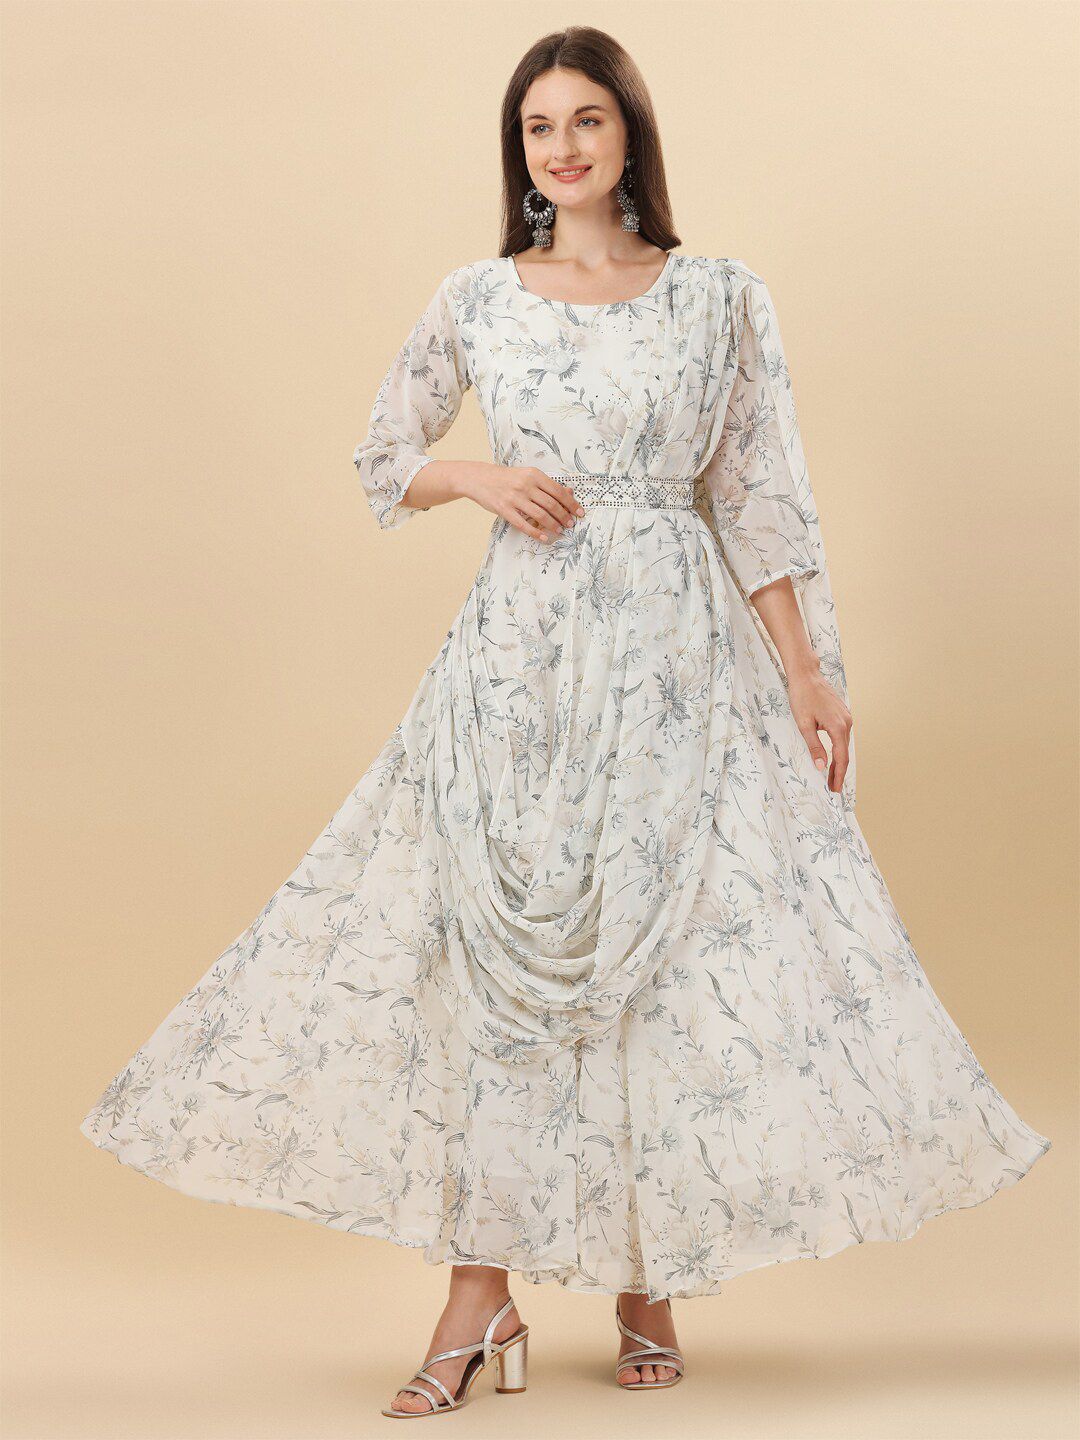 Vidraa Western Store Off White Ethnic Motifs Georgette Maxi Dress Price in India